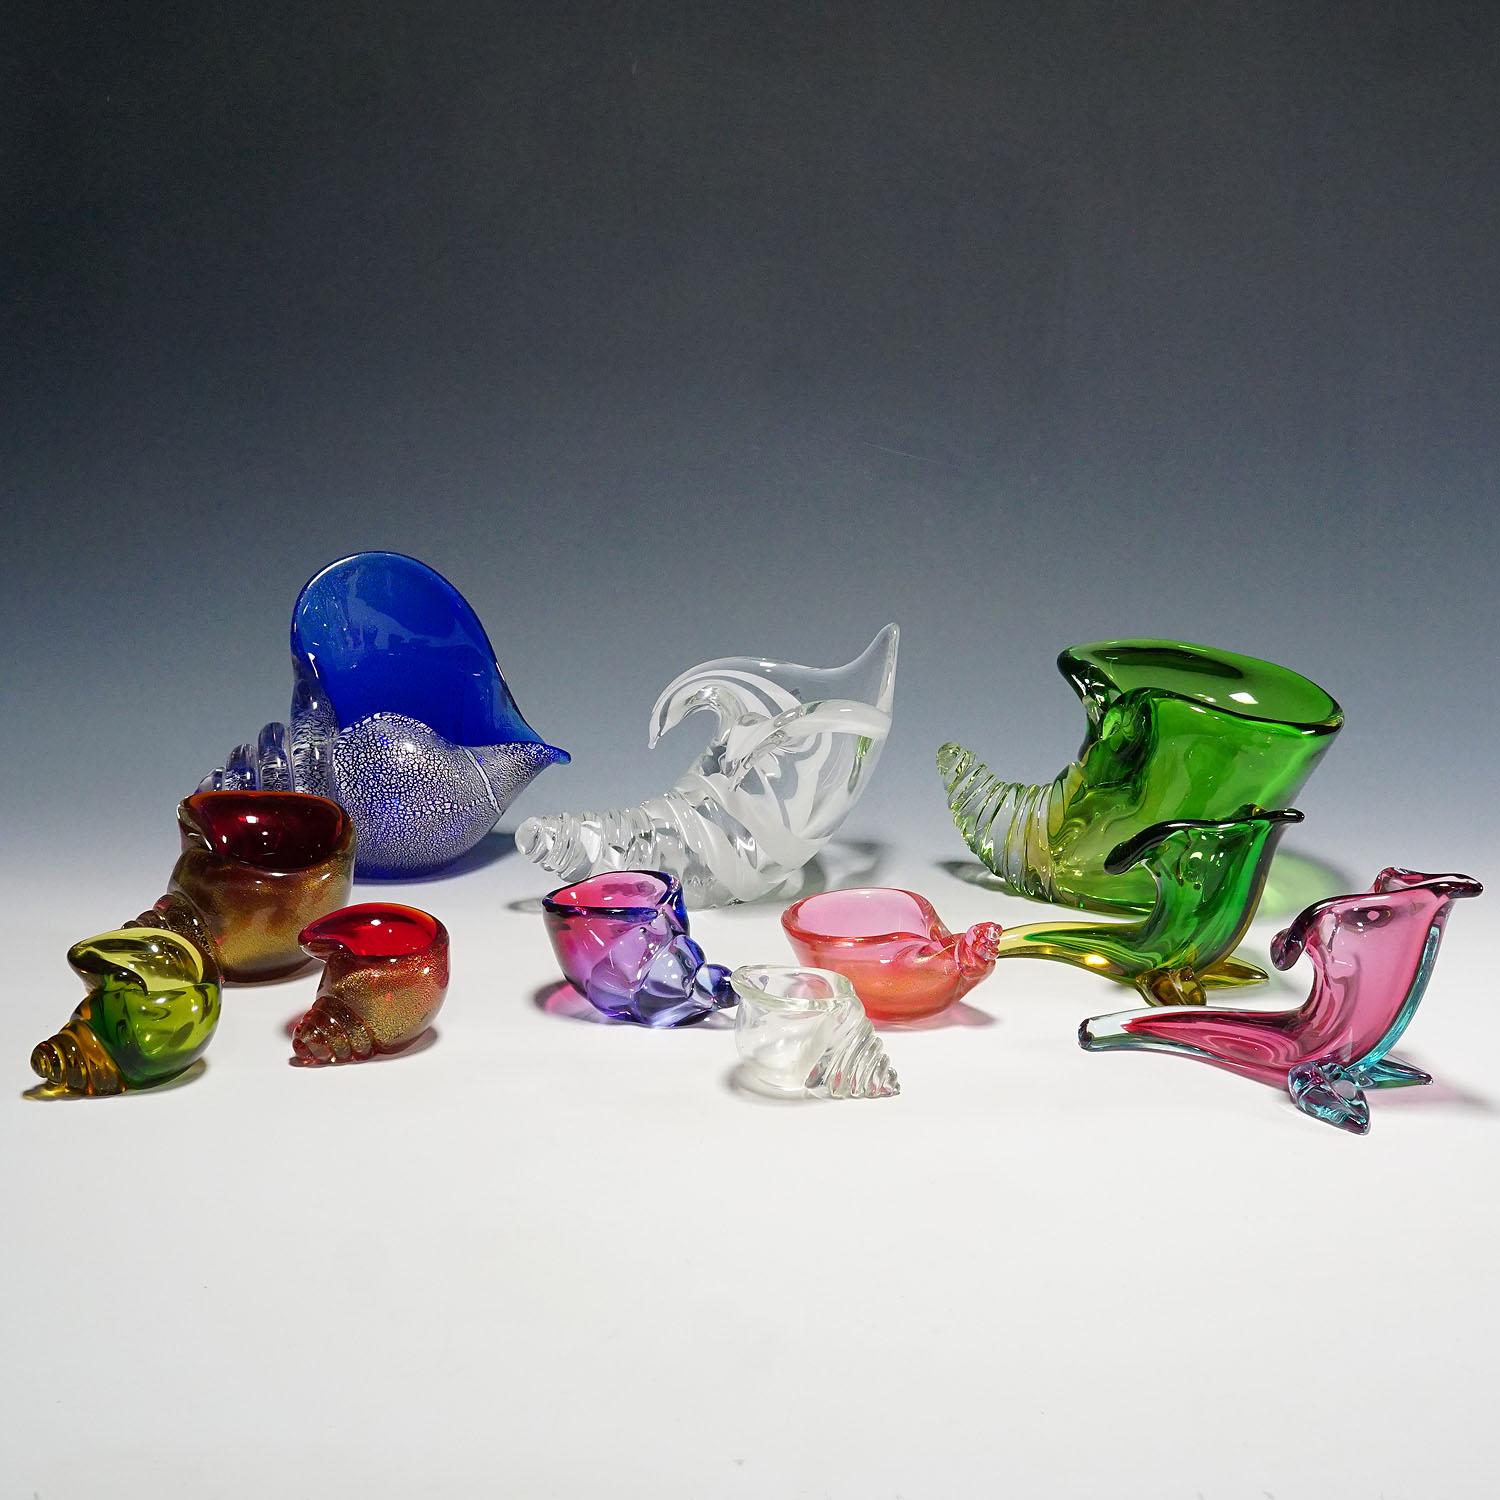 Mid-Century Modern The Collective of 11 Murano Art Glass Cornucopia by Seguso 1950s-60s en vente